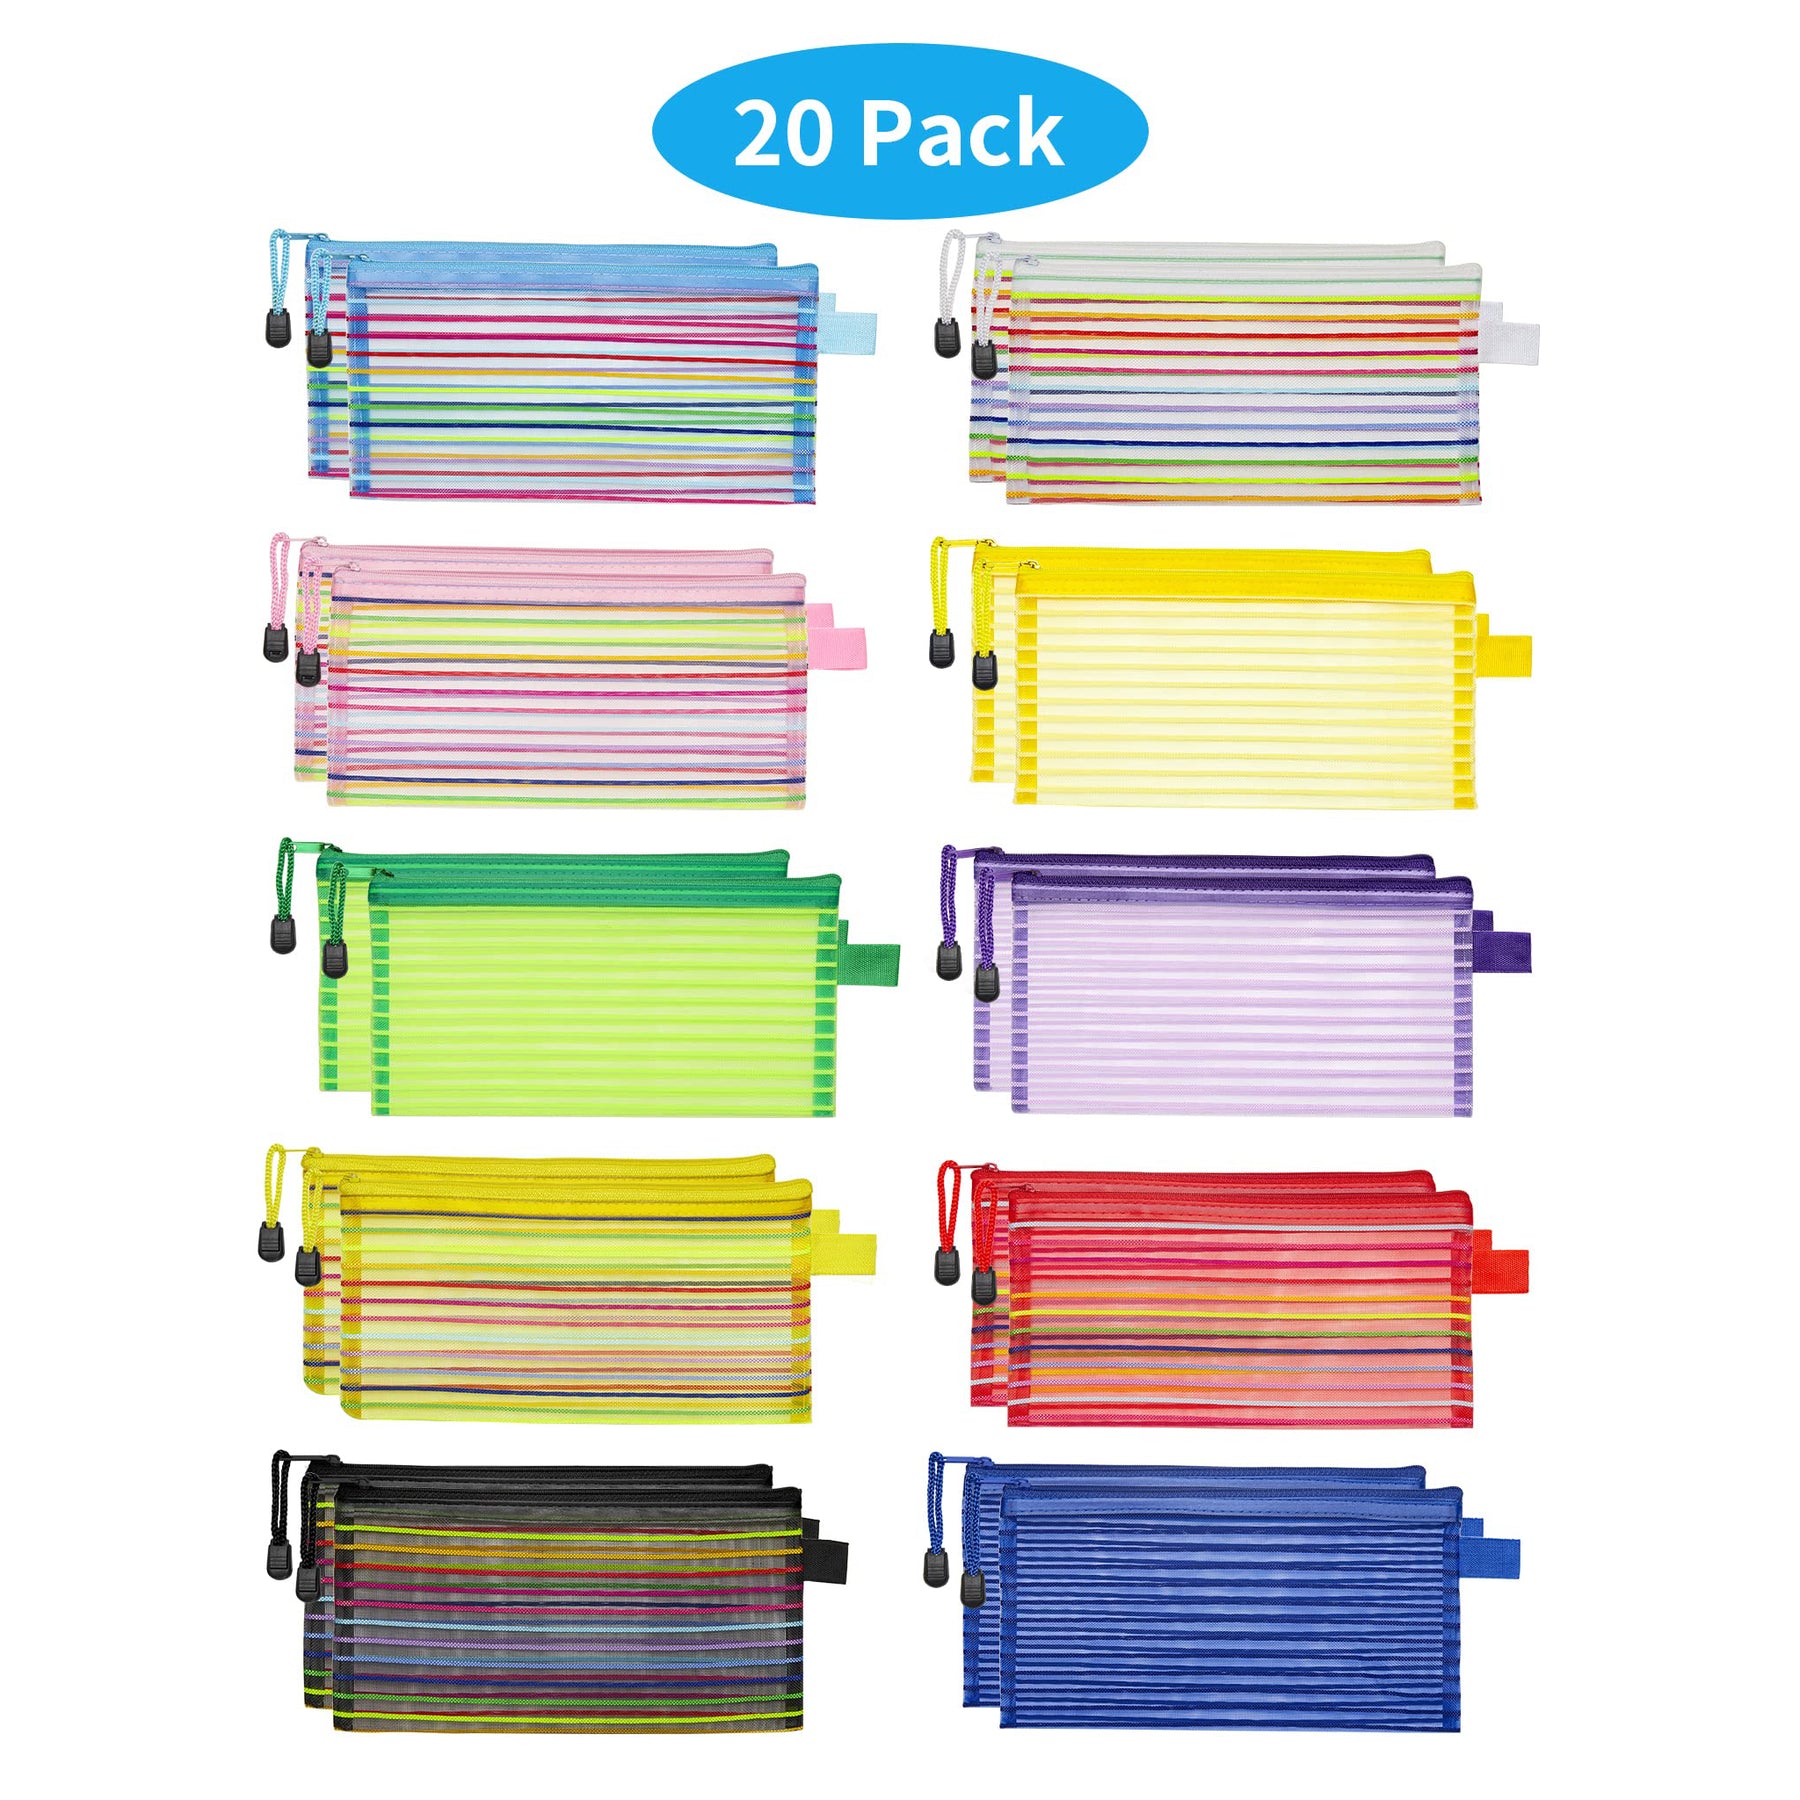 Mesh Zipper Pouch Bags A3-10 Pack Plastic Zipper Pouches for Organizing